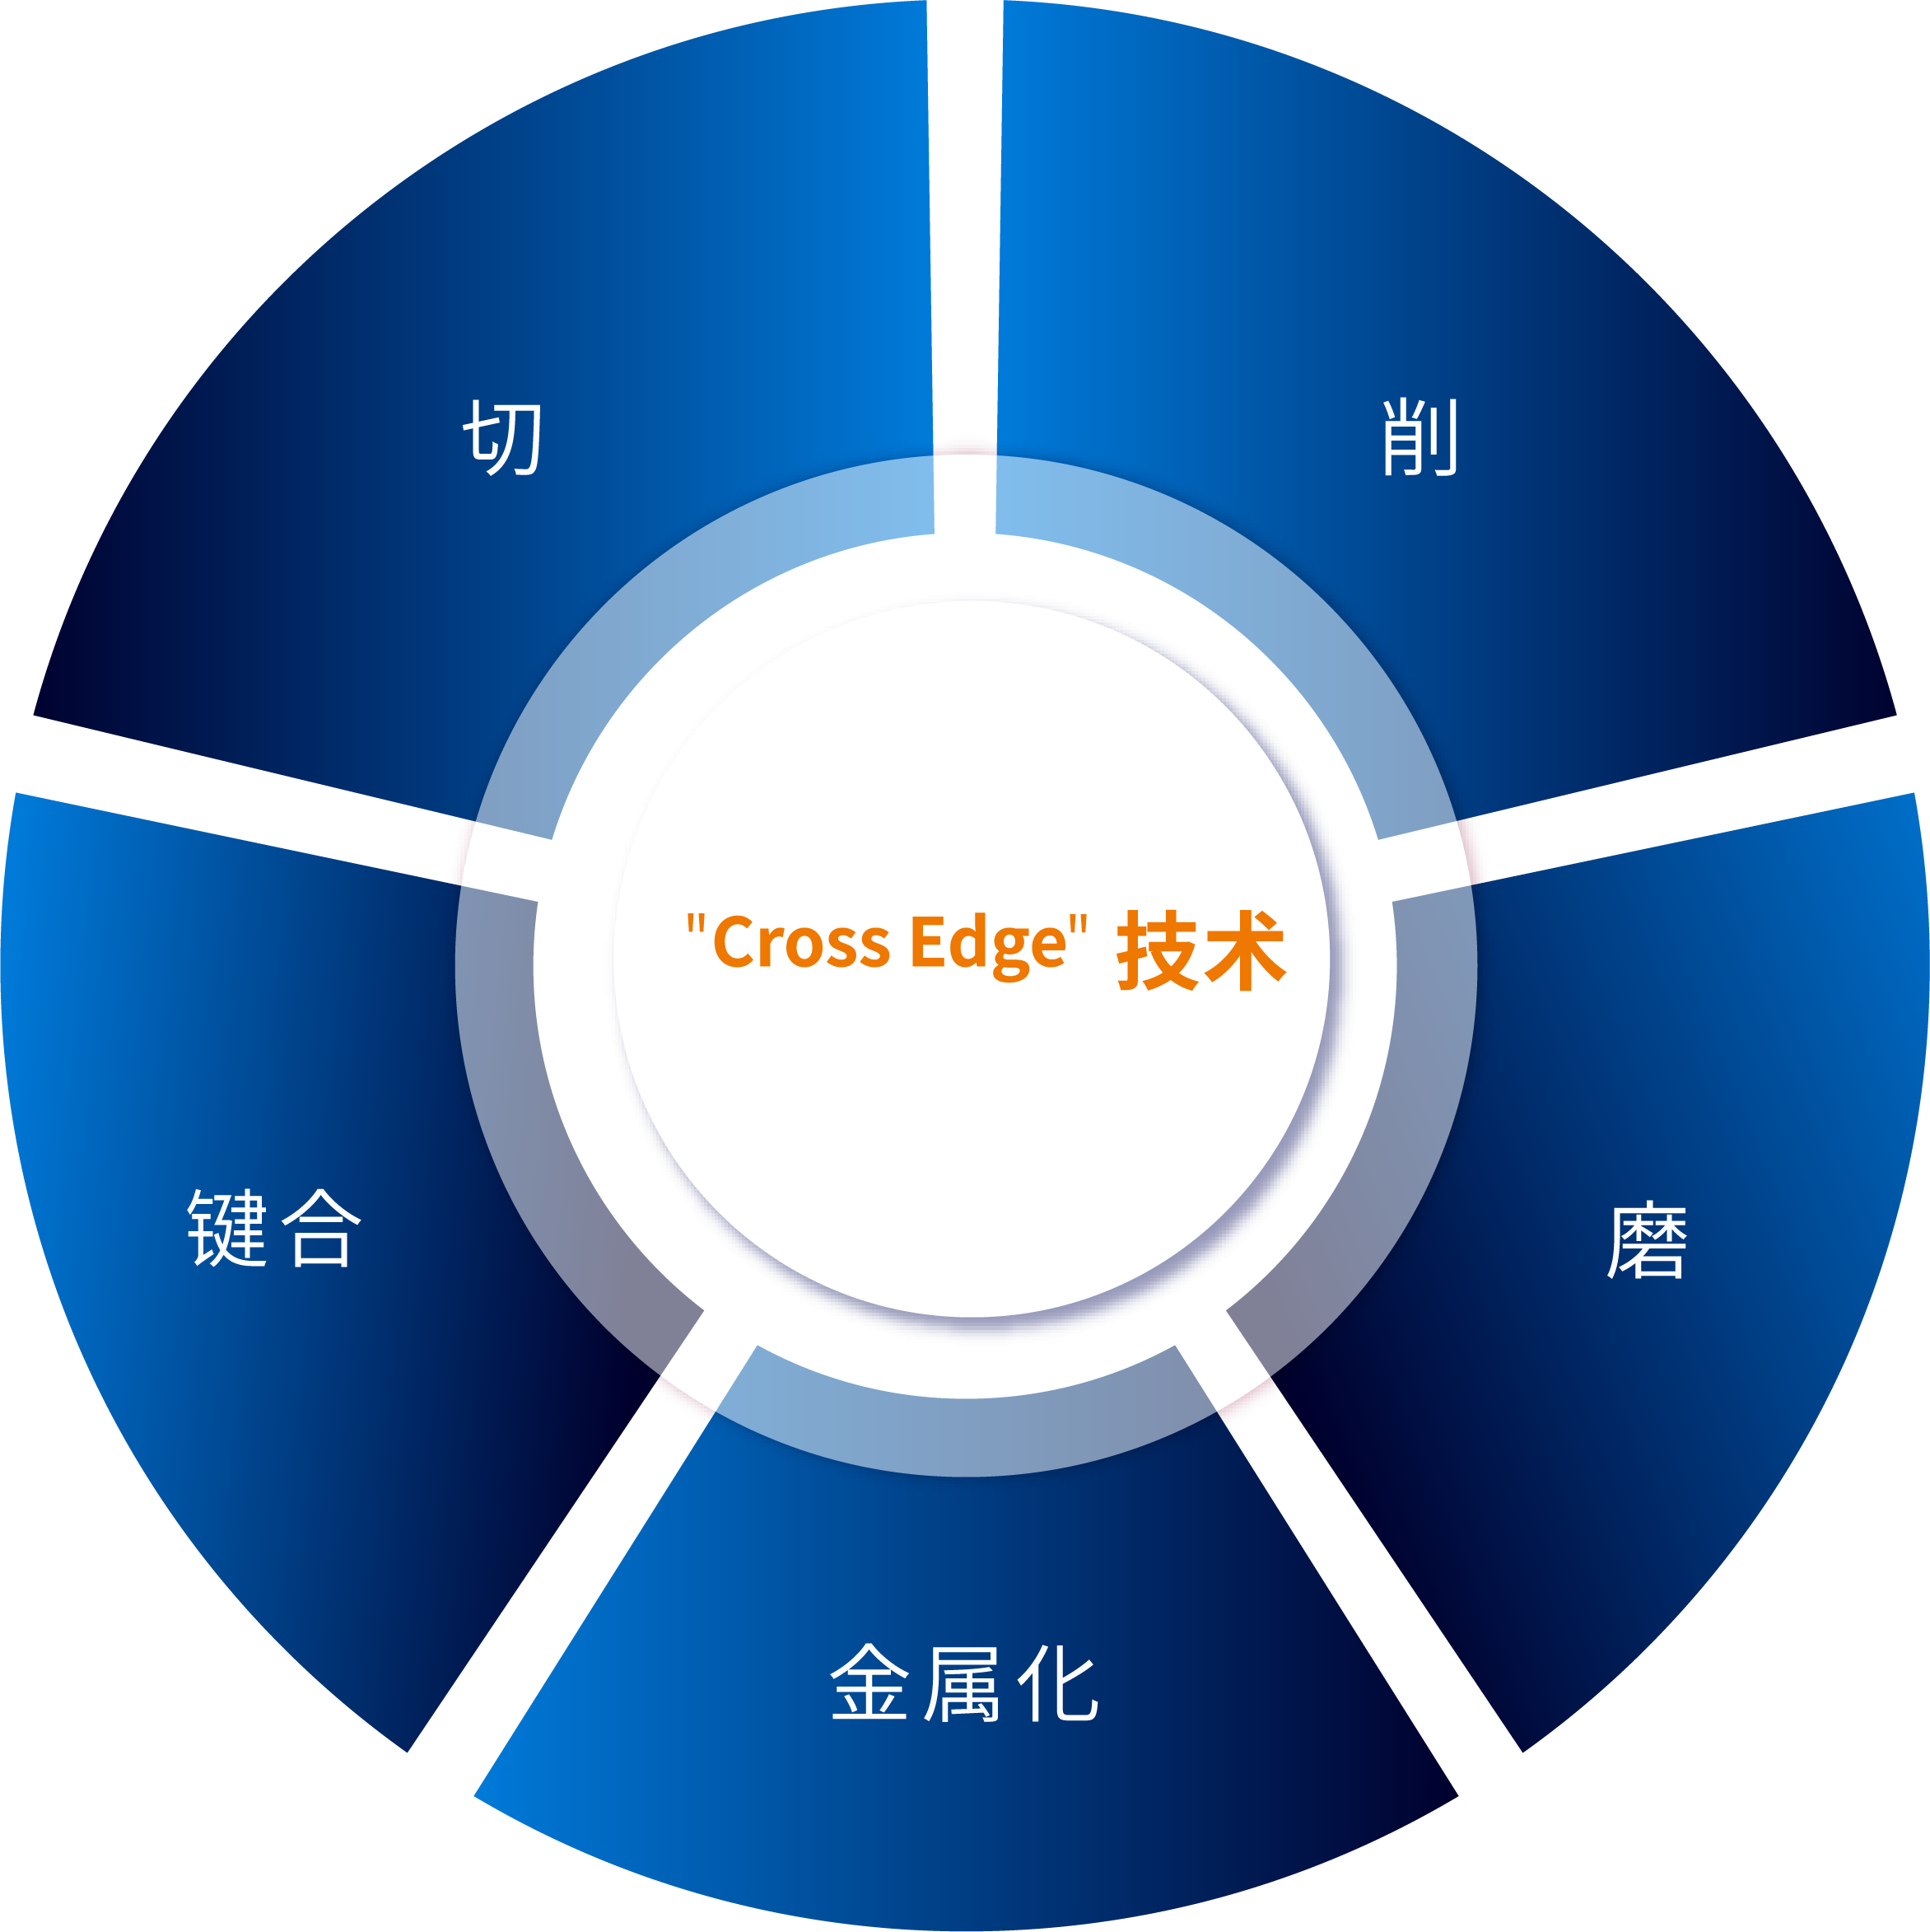 Cross Edge技术